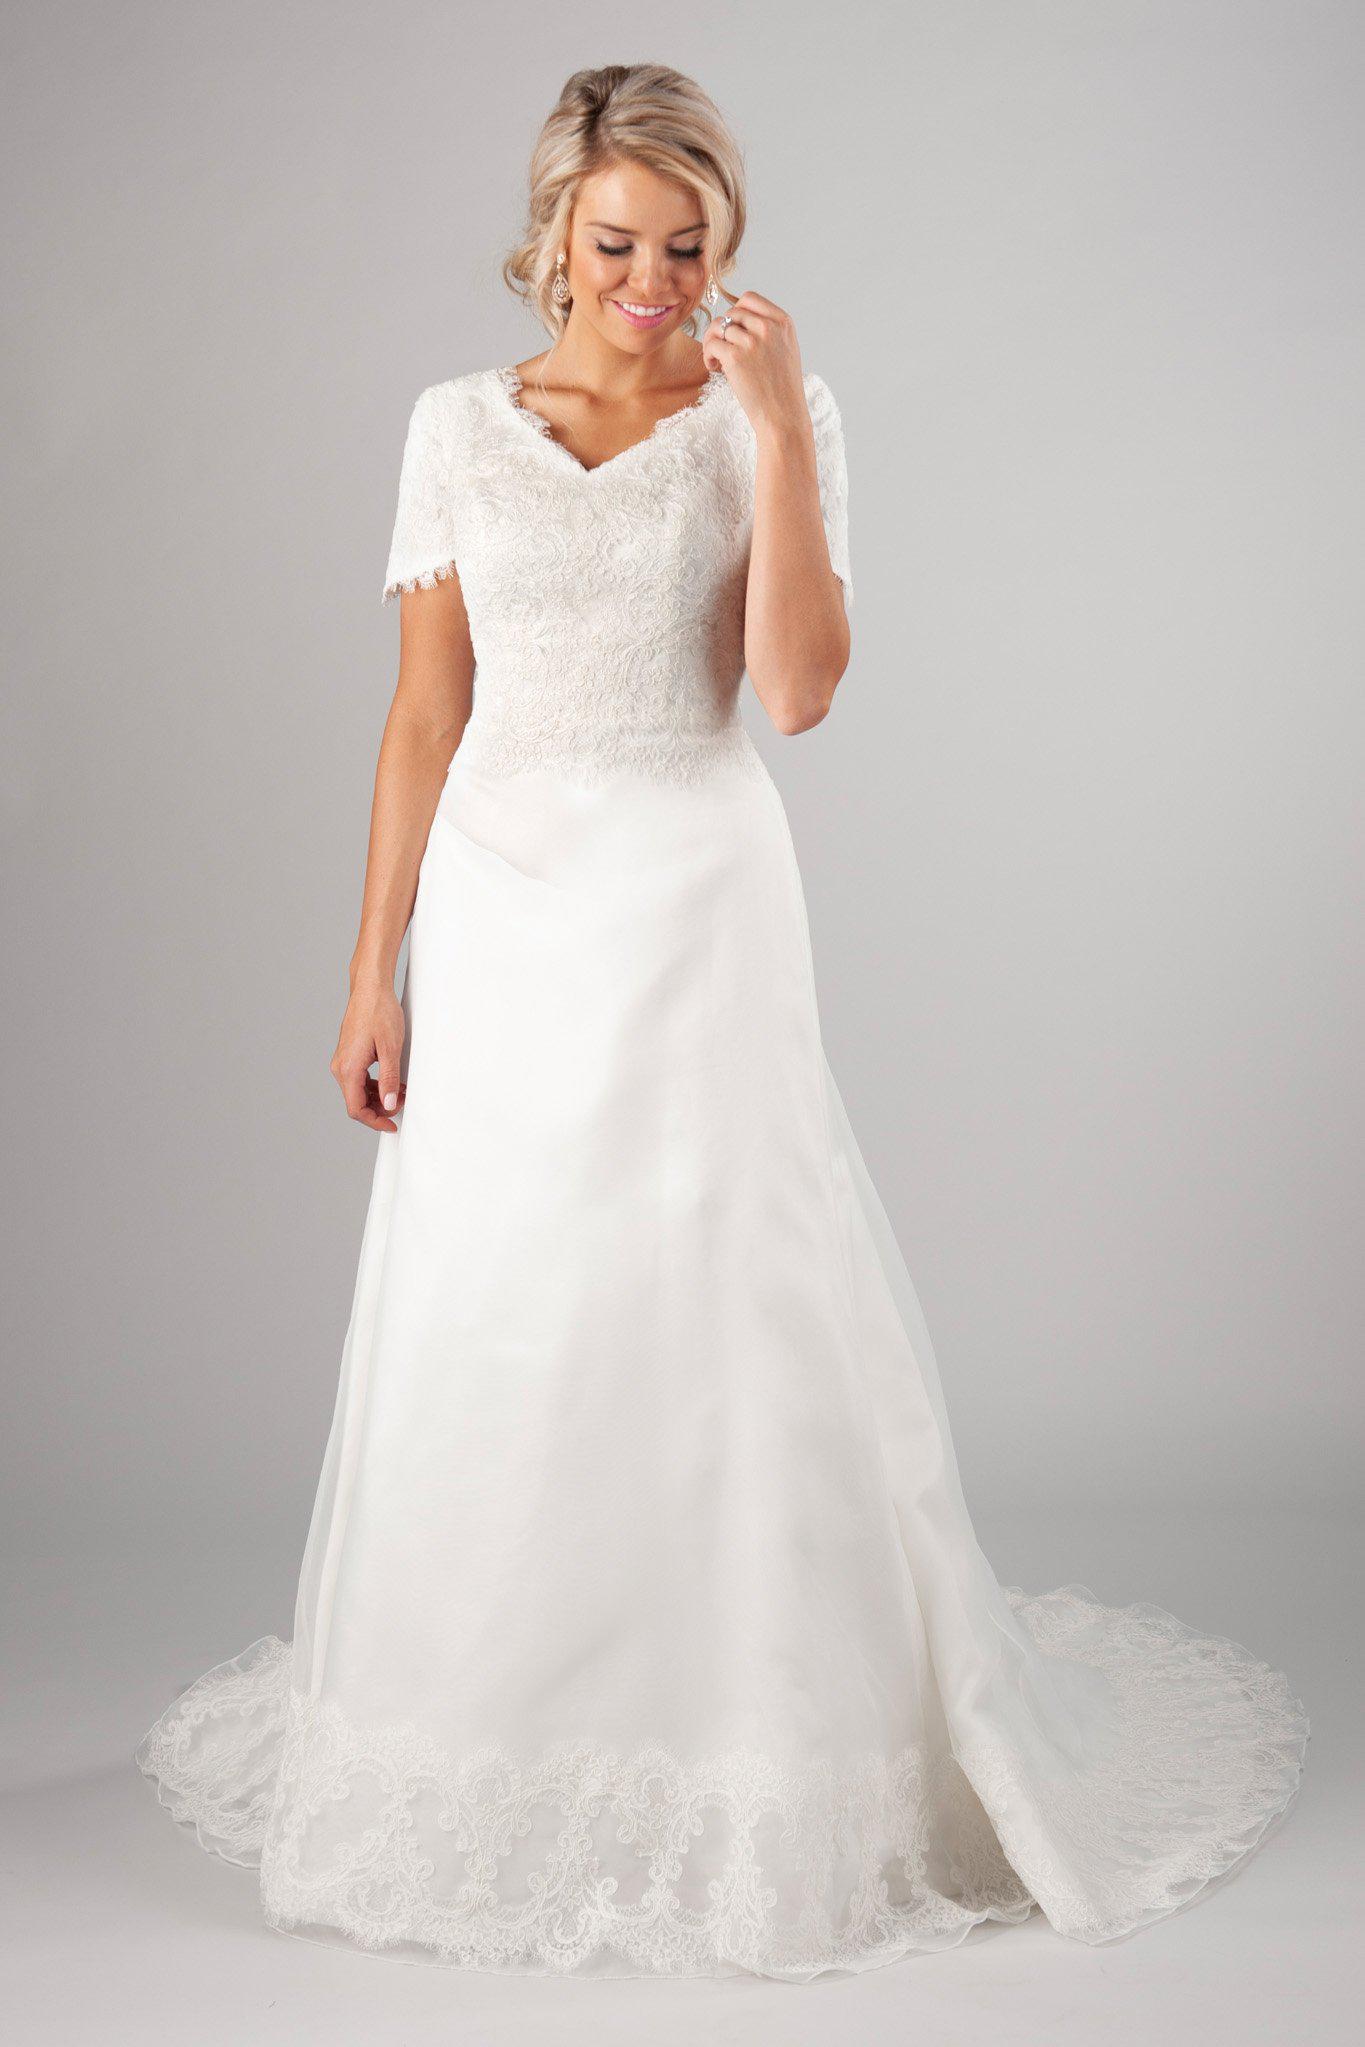 Dreamy modest wedding dress, style Jocelyn, is part of the Wedding Collection of LatterDayBride, a Salt Lake City bridal shop.